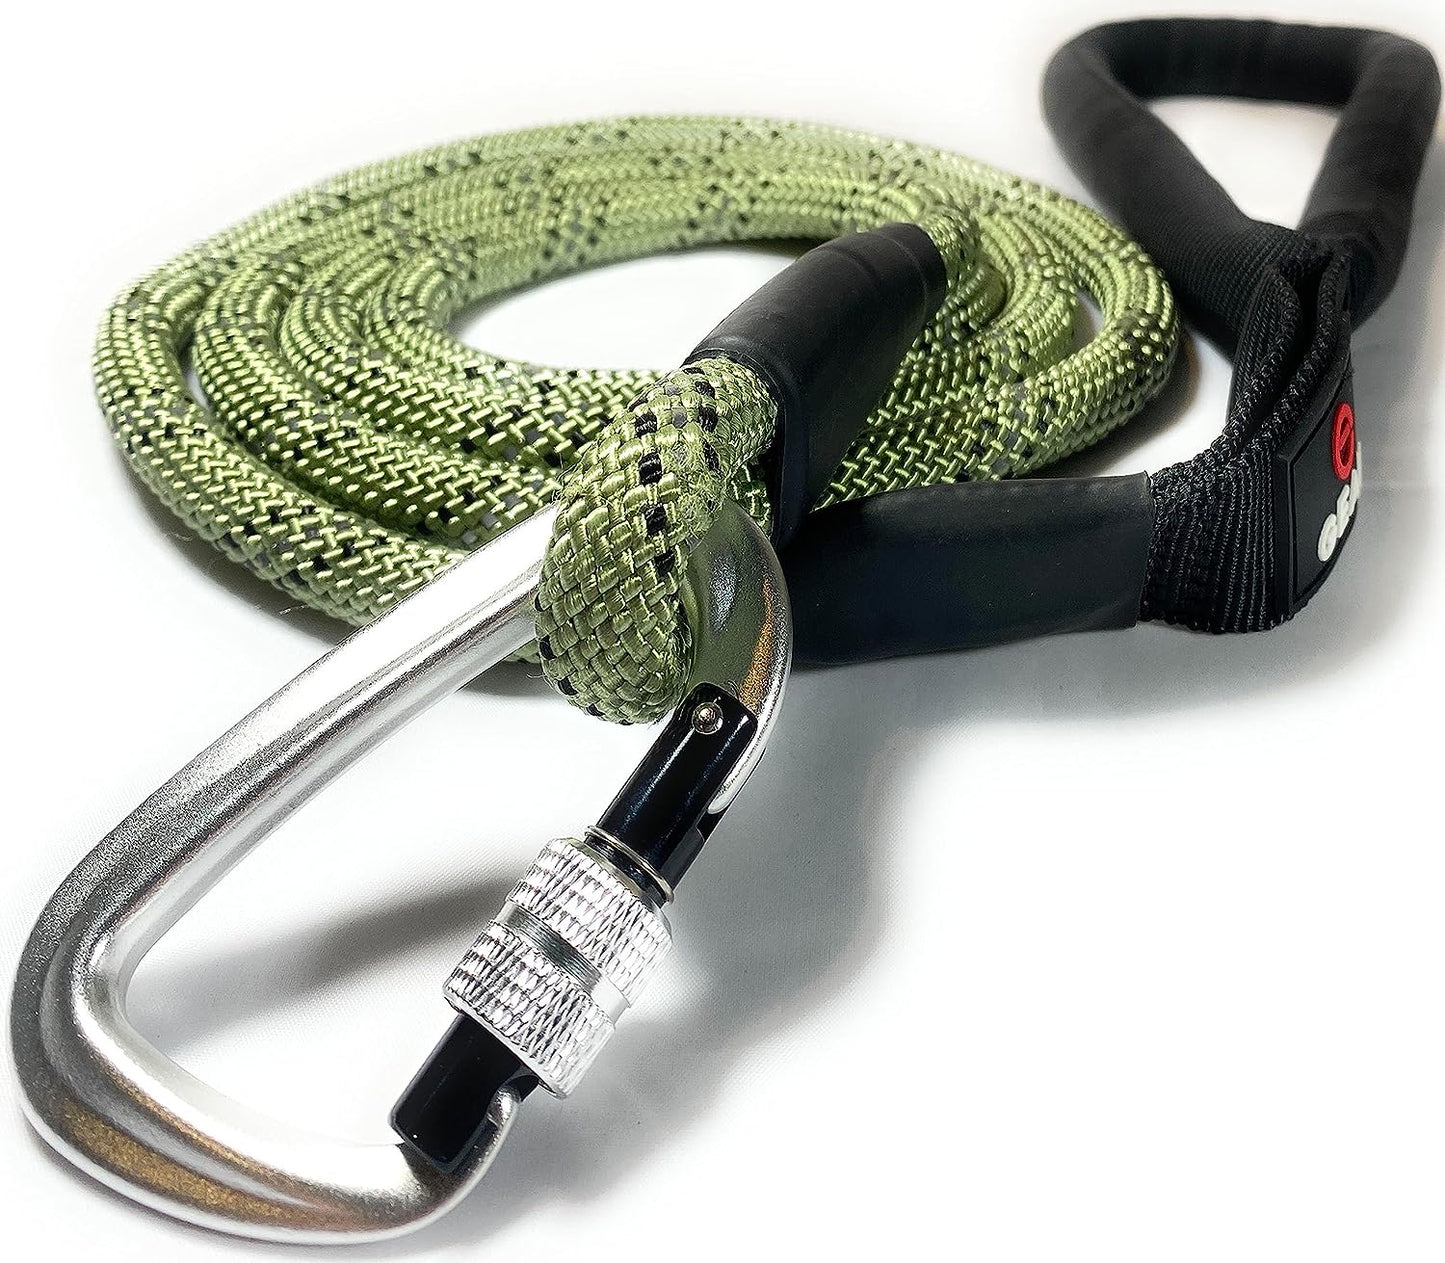 Climbing Rope Dog Leash with Locking Carabiner - Green